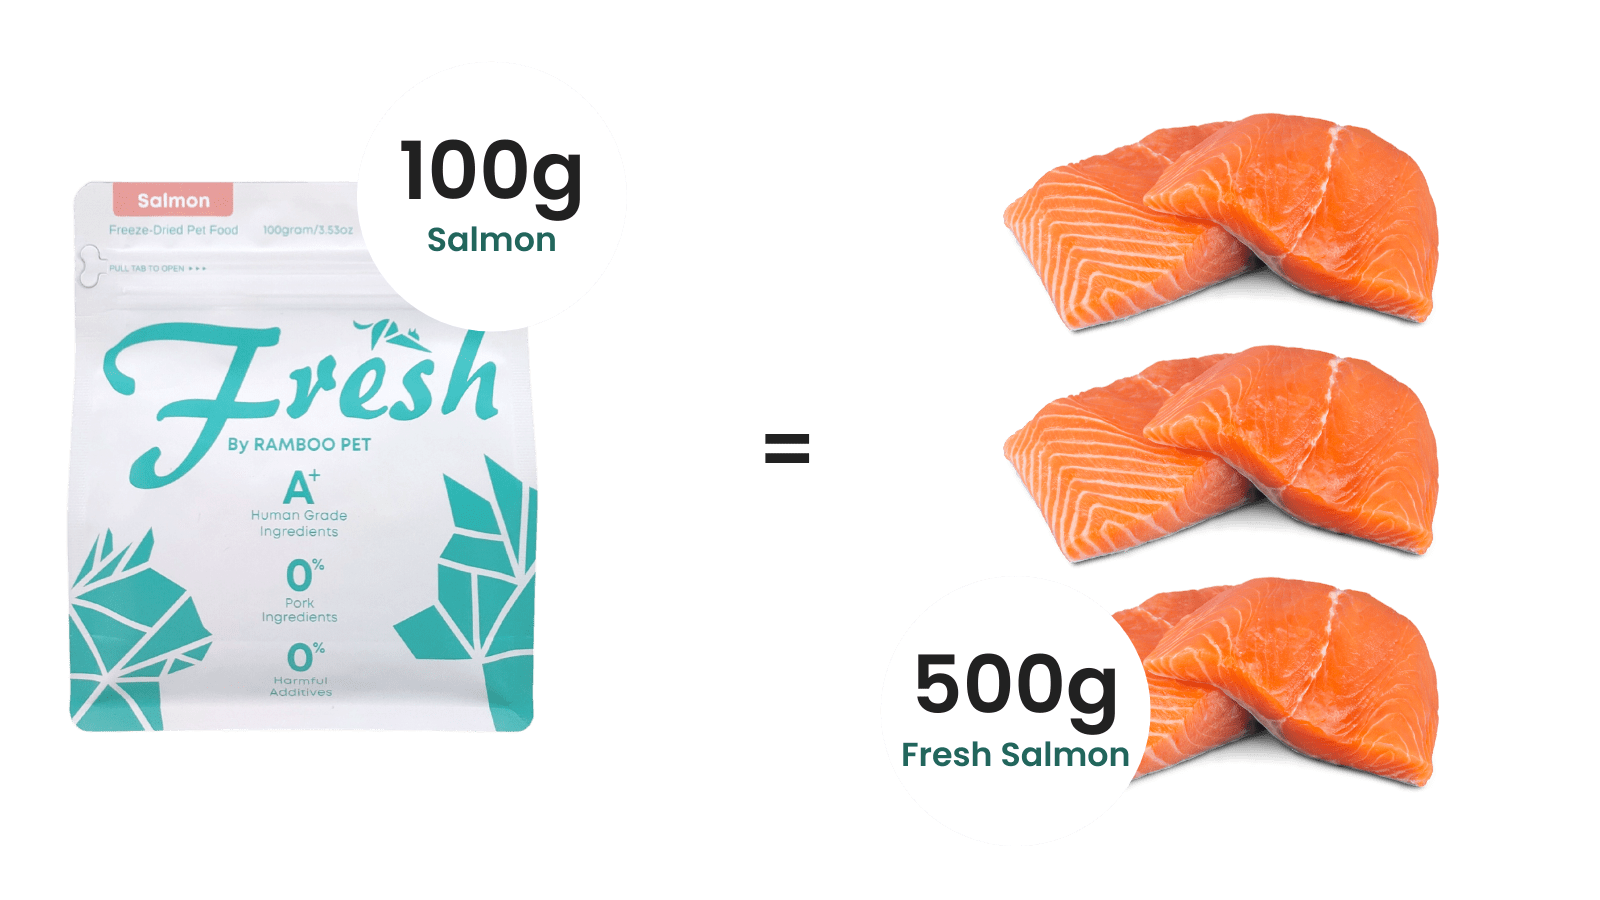 100g of Salmon = 500g of Fresh Salmon